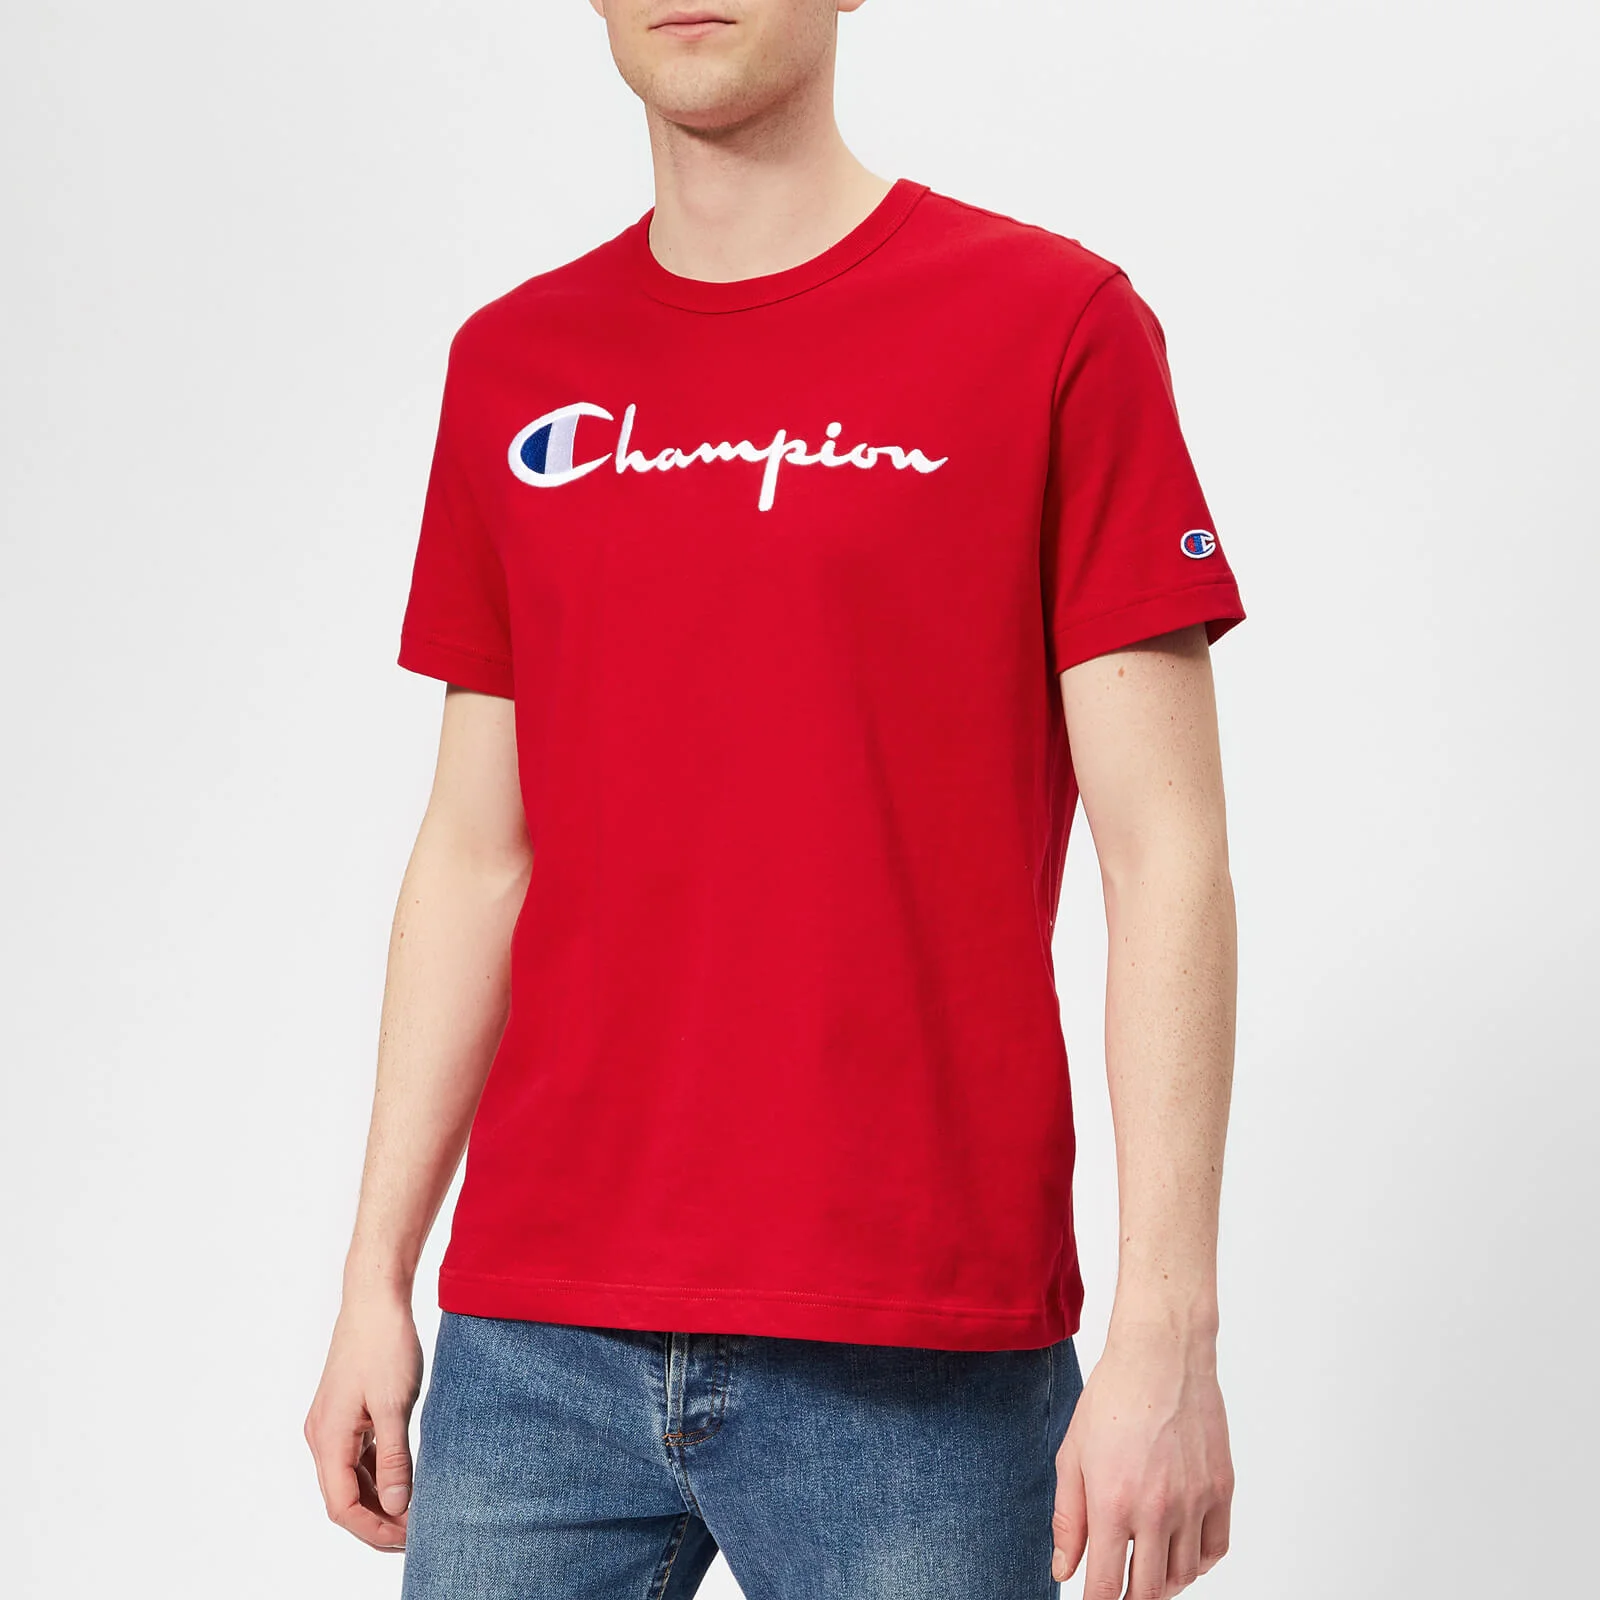 Champion Men's Script T-Shirt - Red Image 1